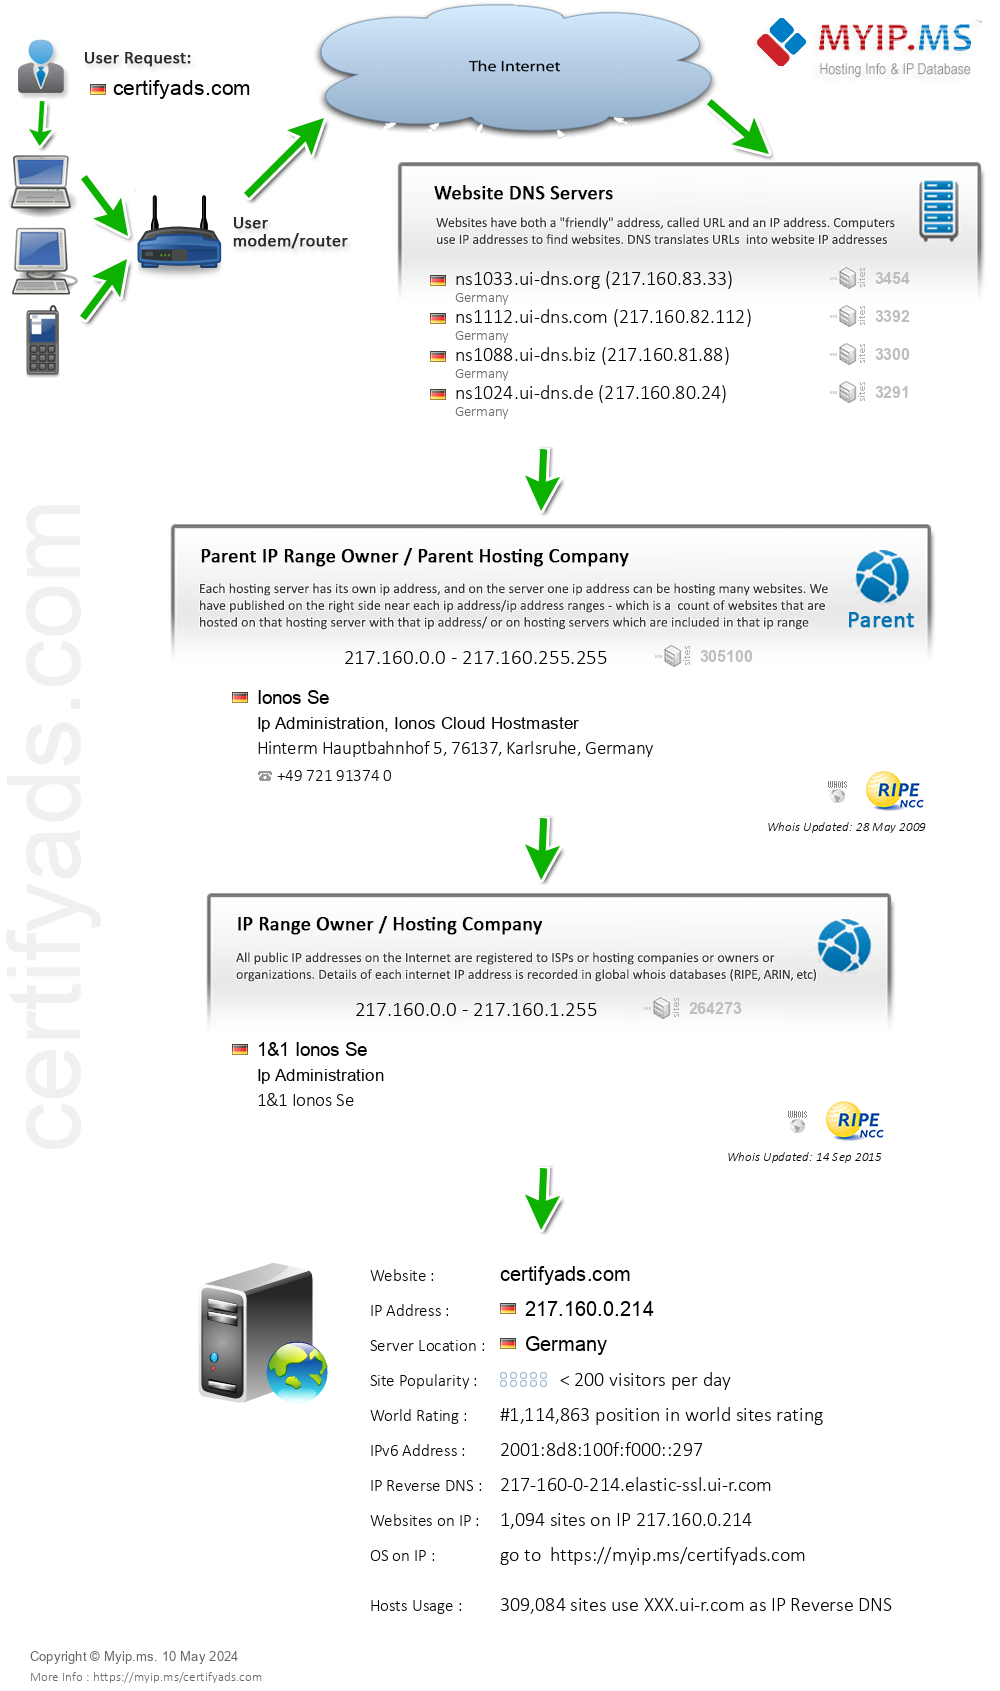 Certifyads.com - Website Hosting Visual IP Diagram